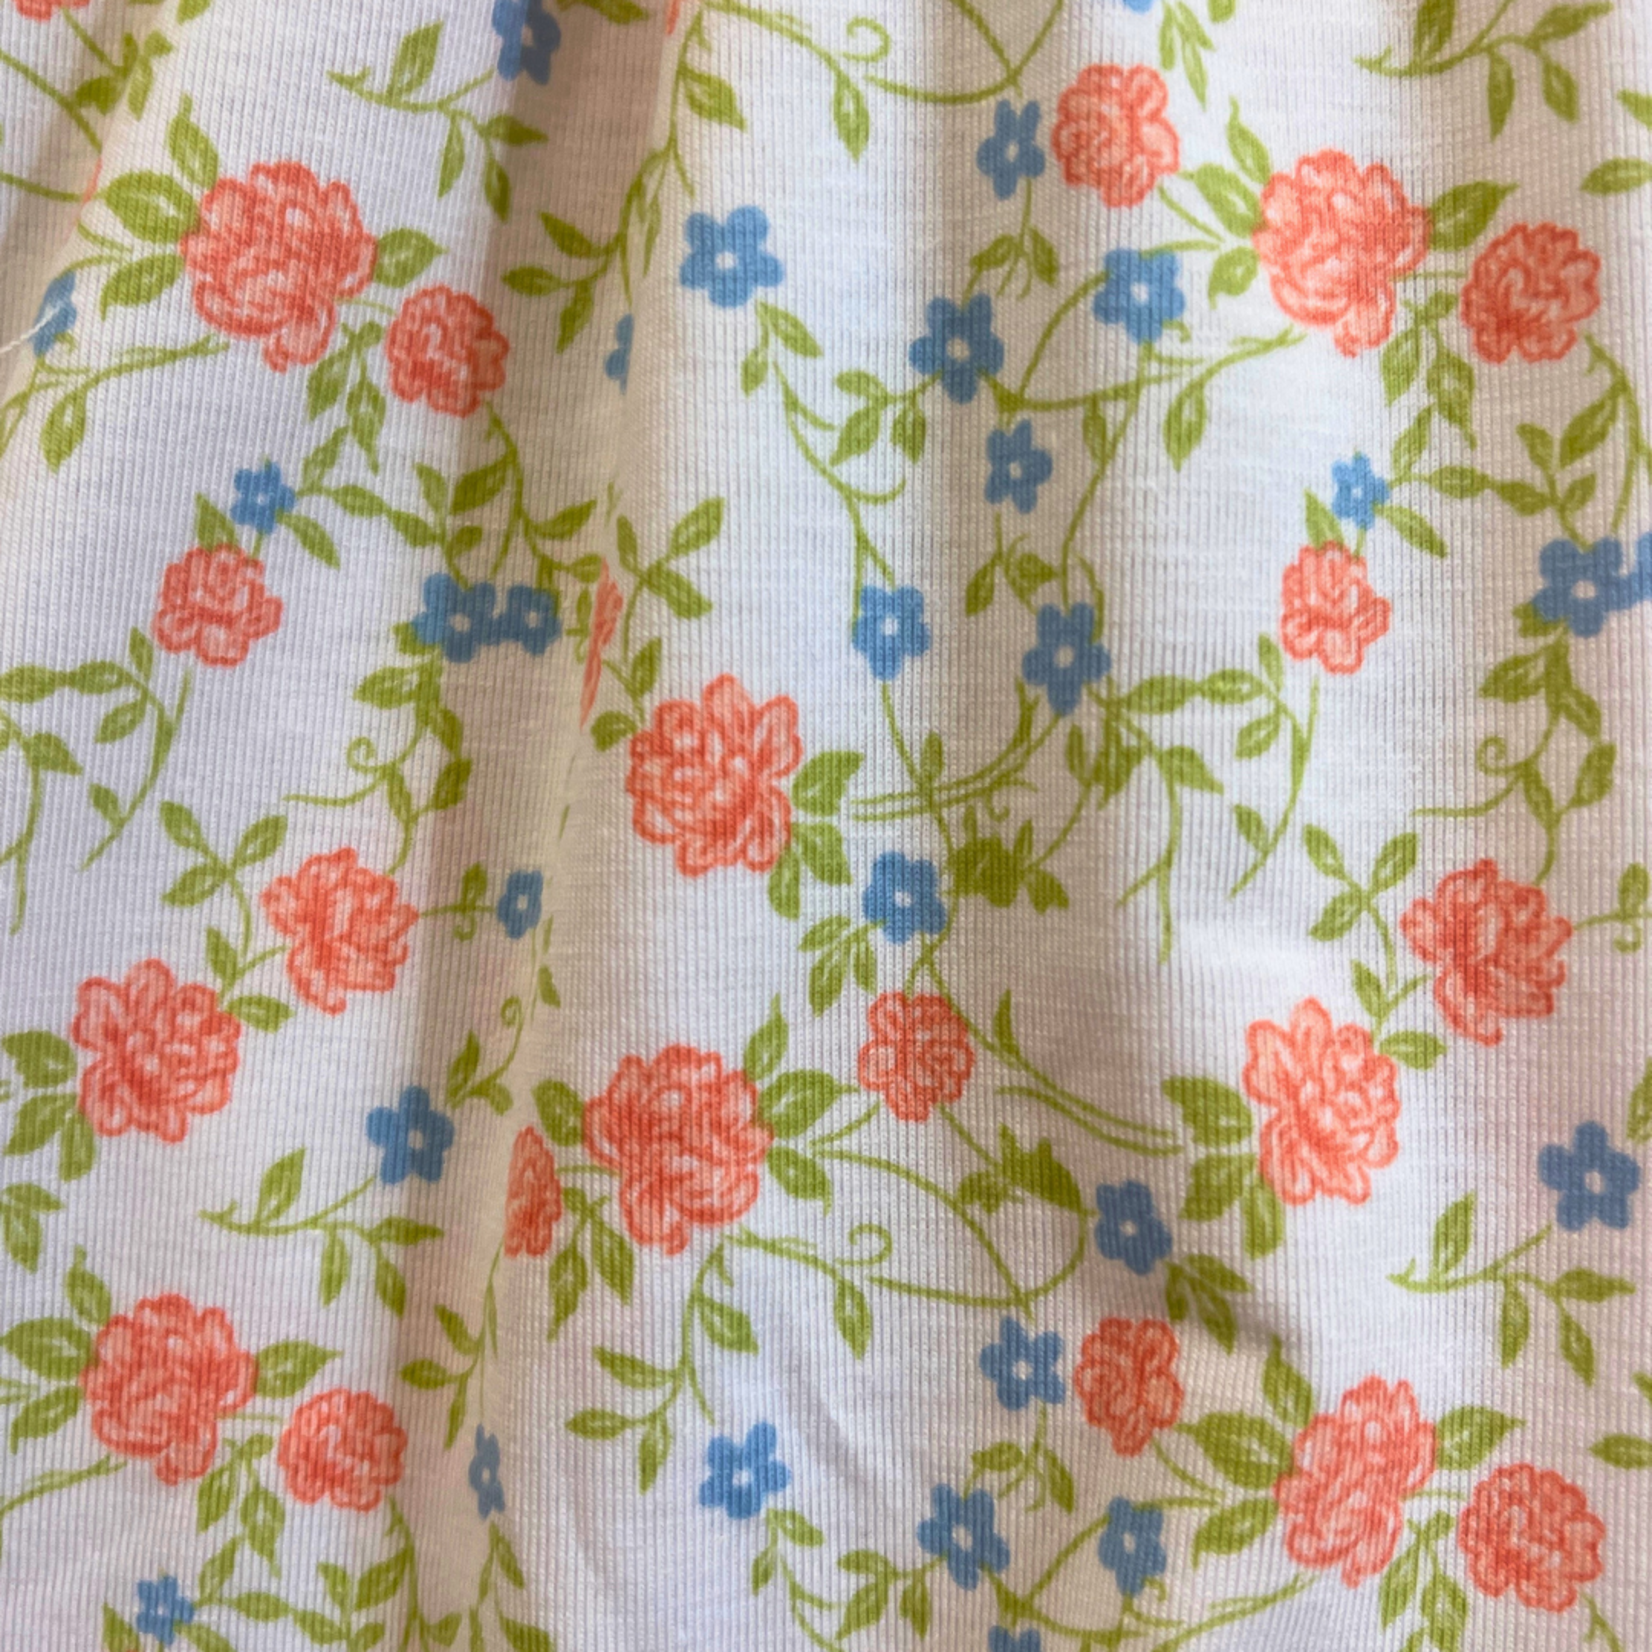 Sage & Lilly Peach Floral Smocked Tie Shoulder Dress